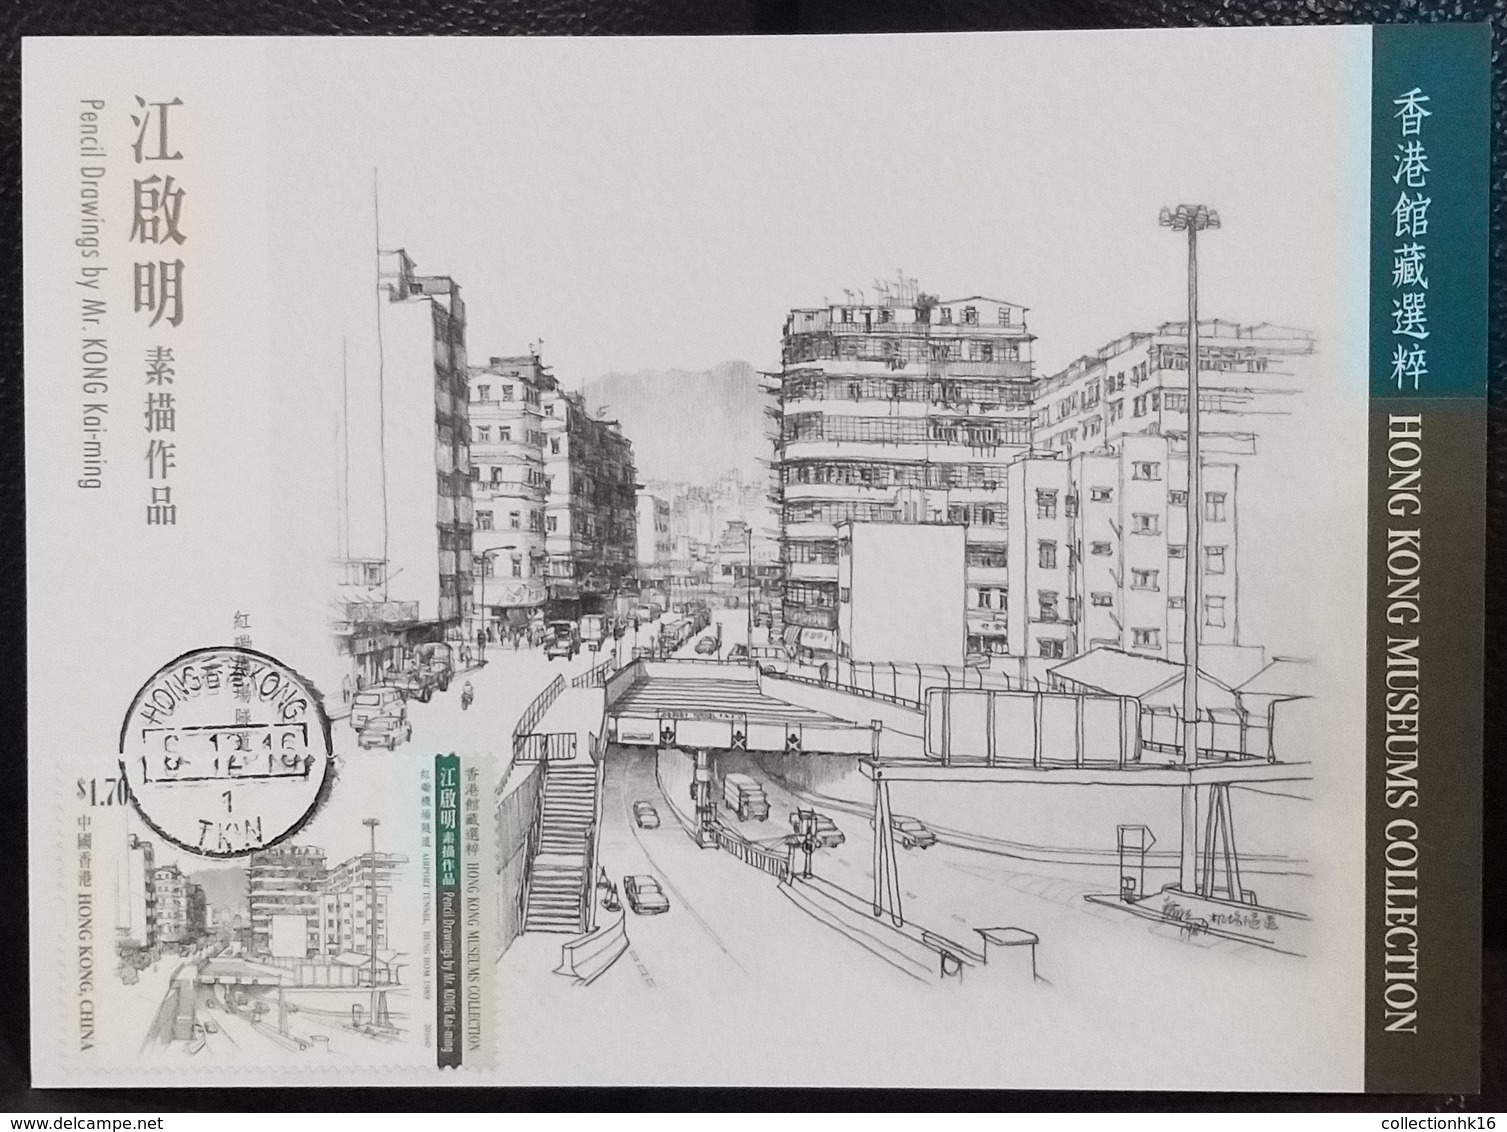 Museums Collection - Pencil Drawings Old Building Streets 2016 Hong Kong MaxSimum Card MC Set (Location Postmark) - Cartes-maximum